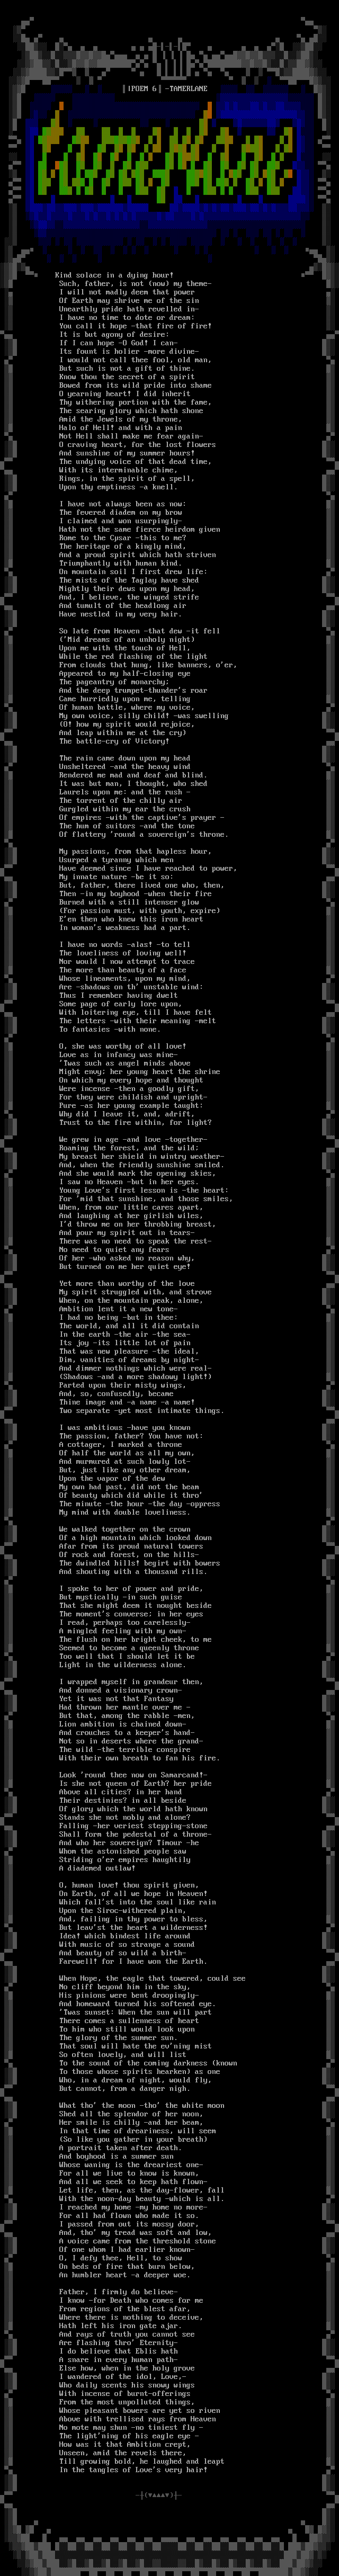 Poem 6 - Tamerlane by Spitoufs